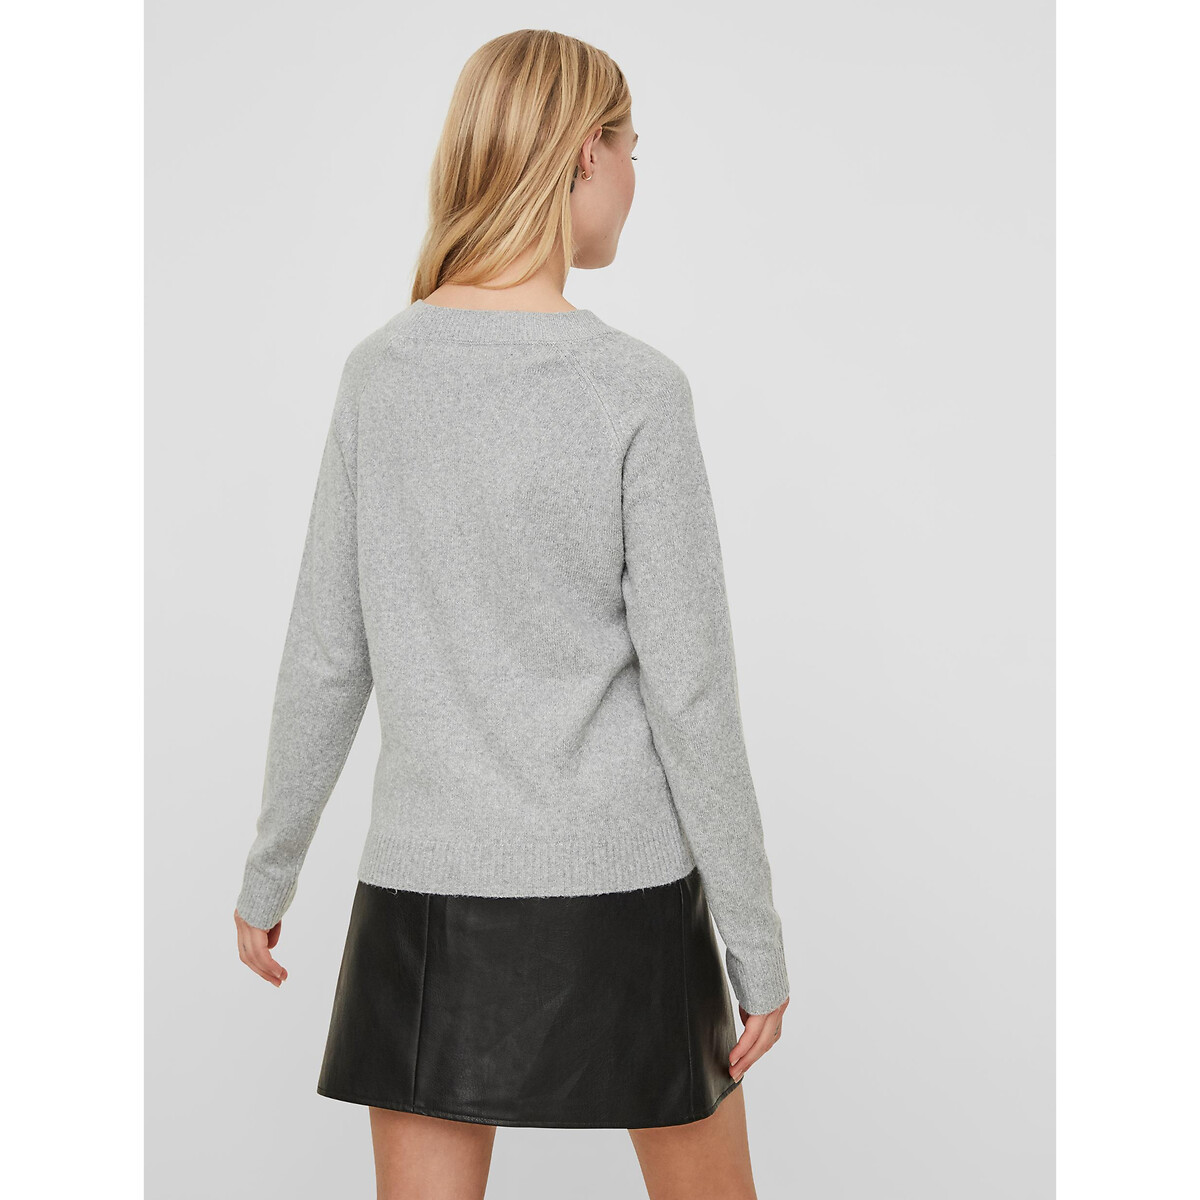 Пуловер La Redoute С круглым вырезом тонкий трикотаж XS серый, размер XS - фото 3